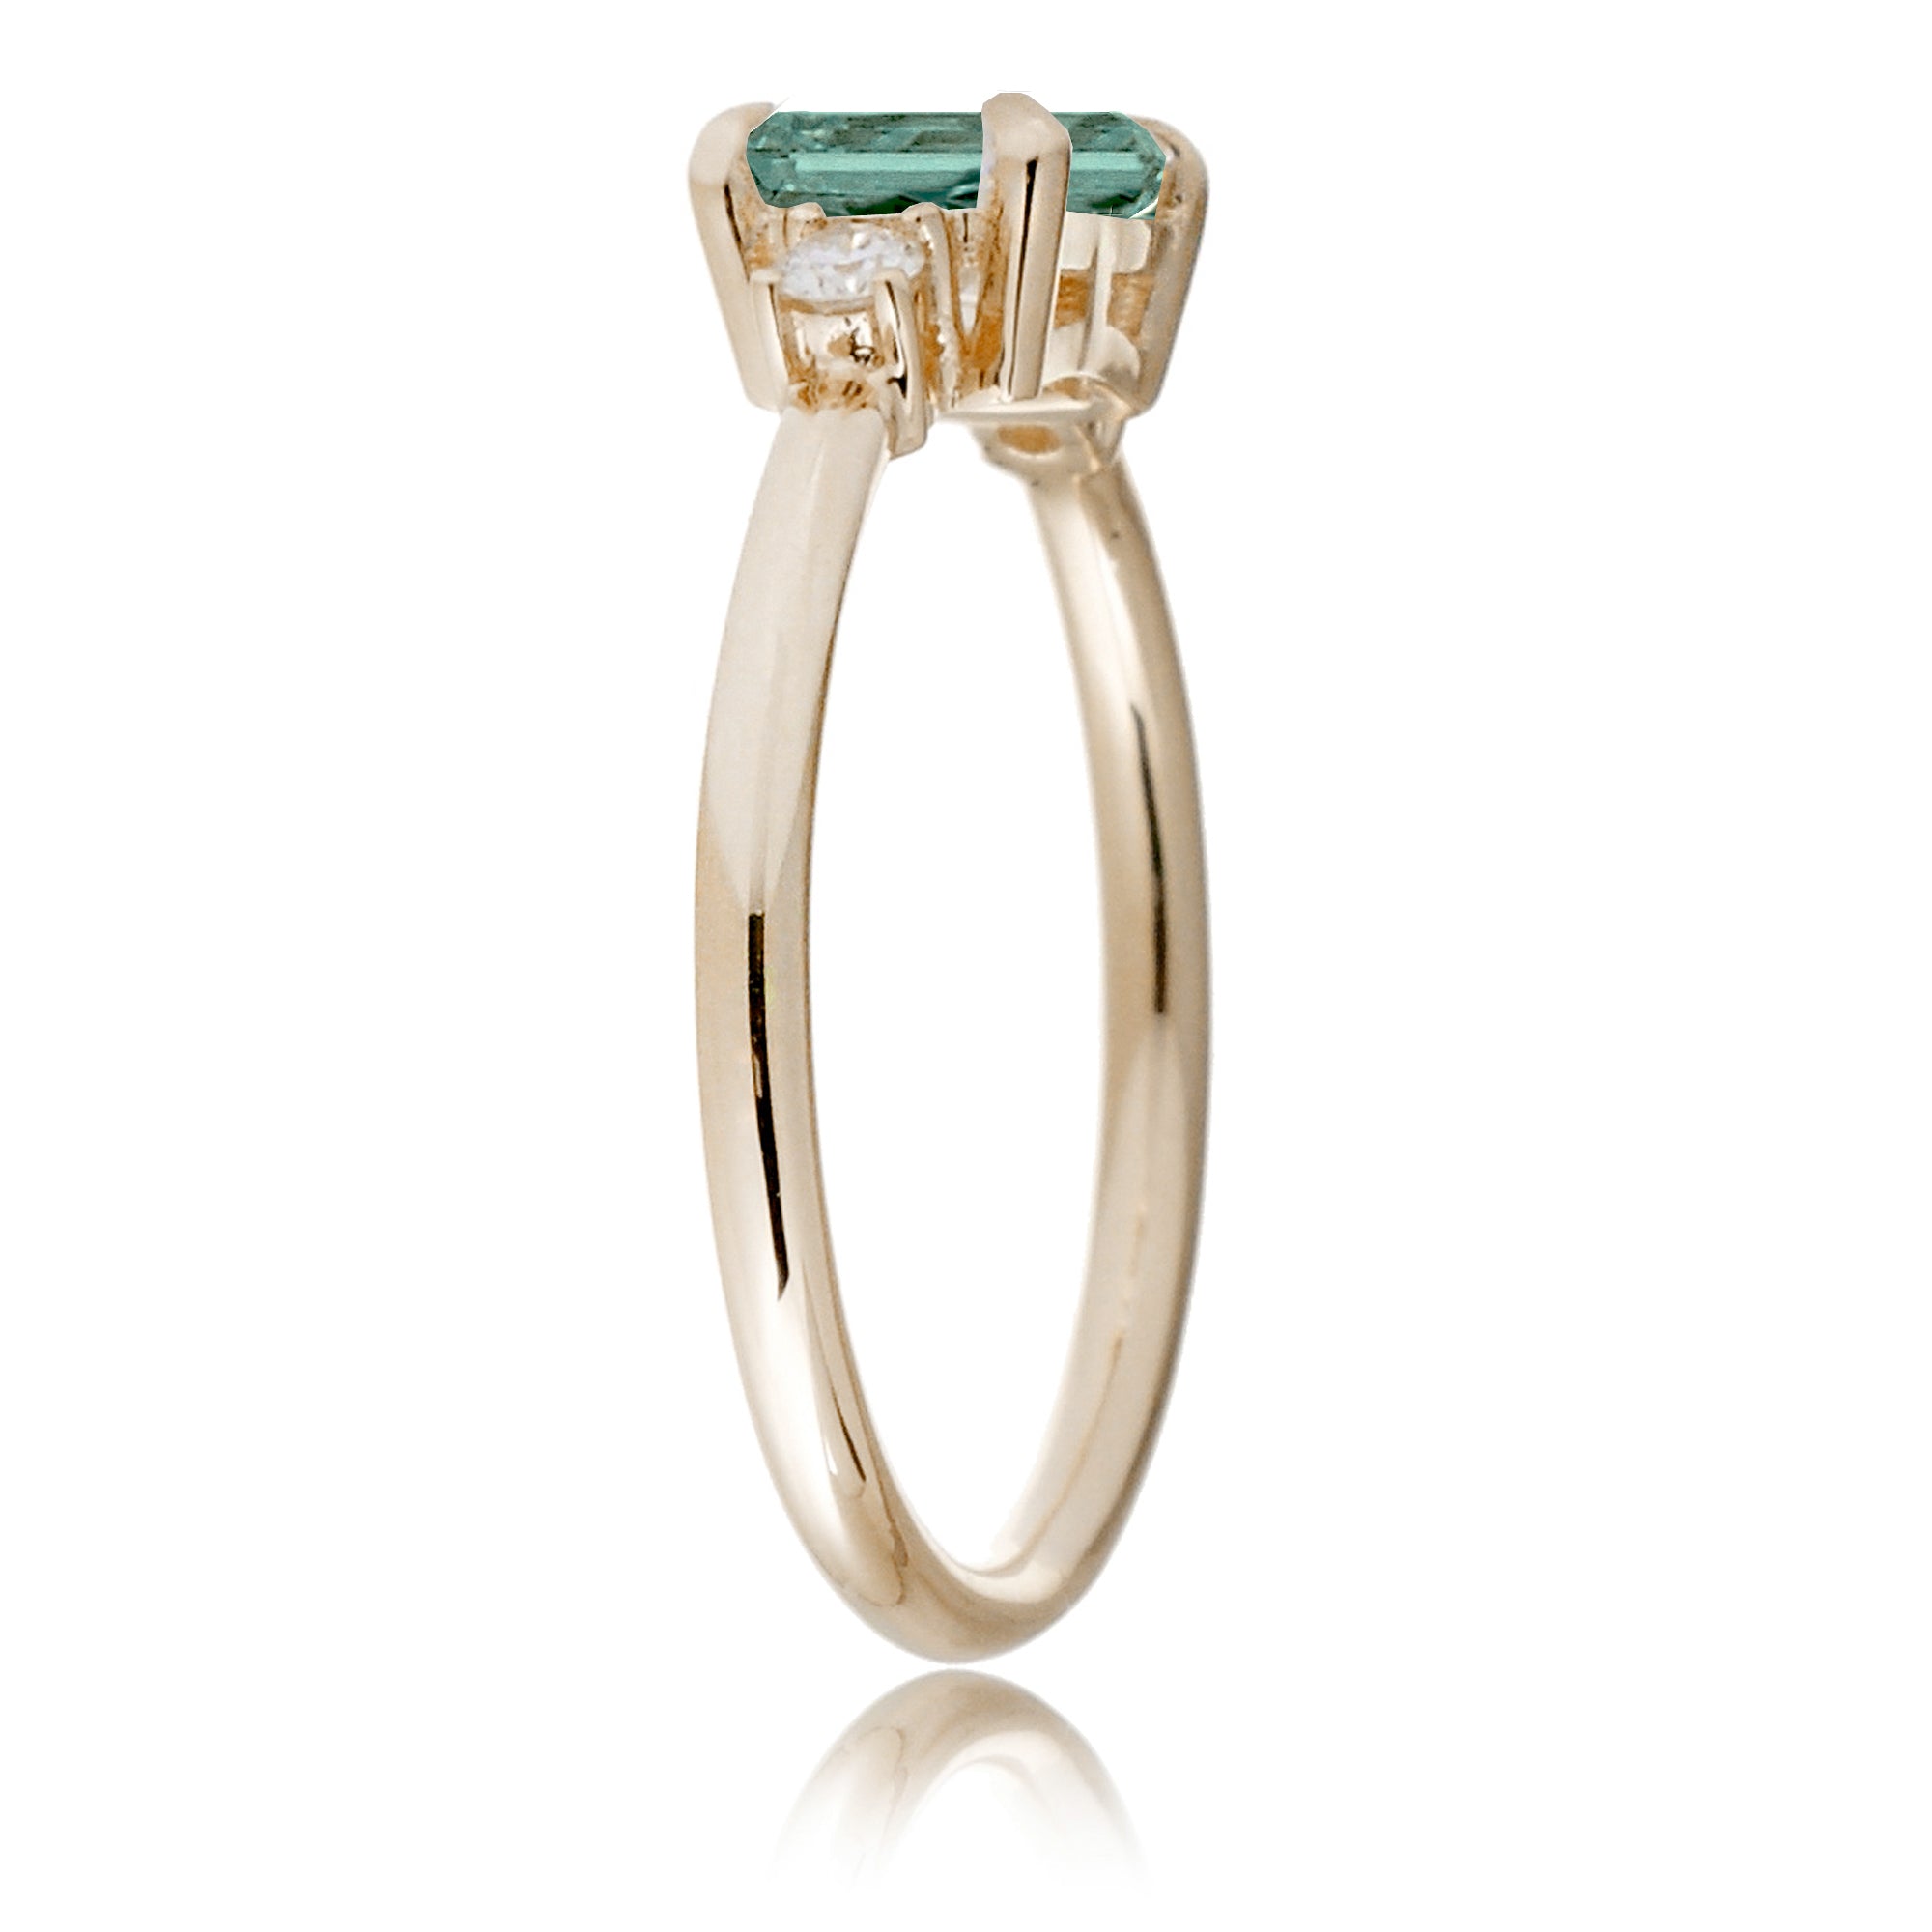 Emerald cut green sapphire three stone ring the Lena yellow gold